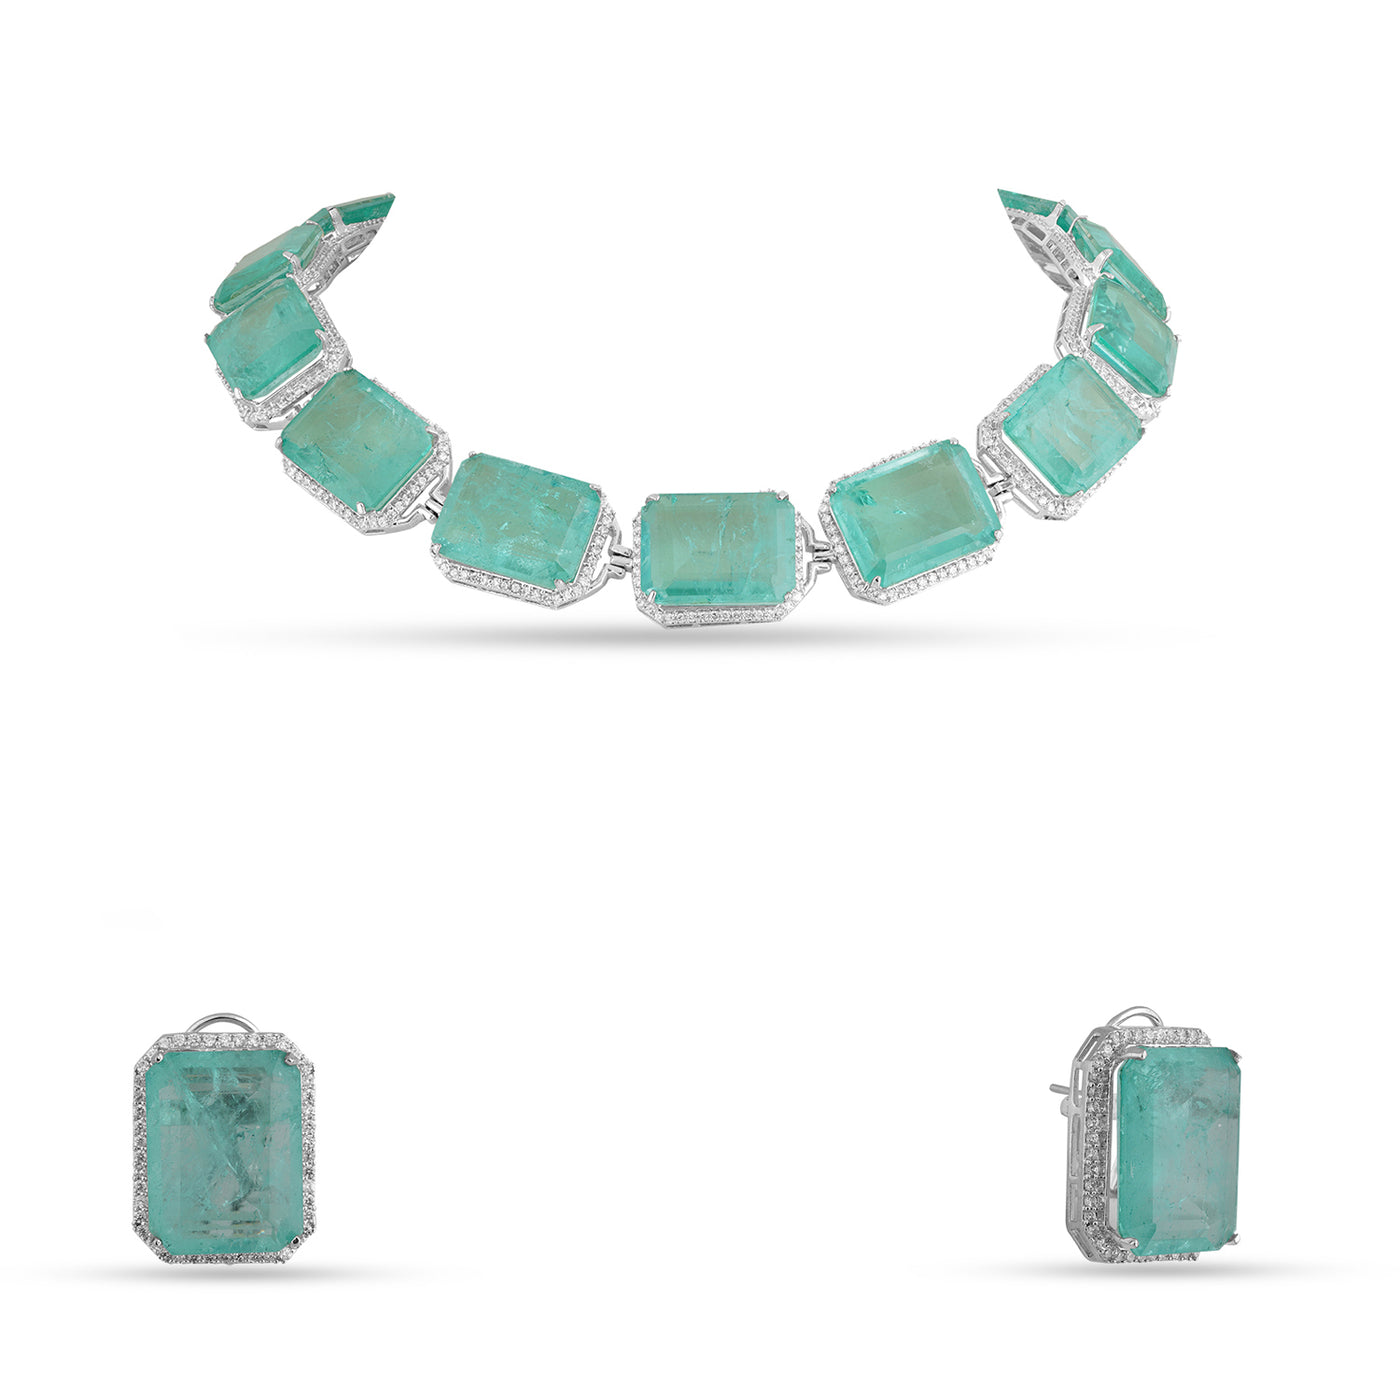 Hazimah - Sea green stone necklace set